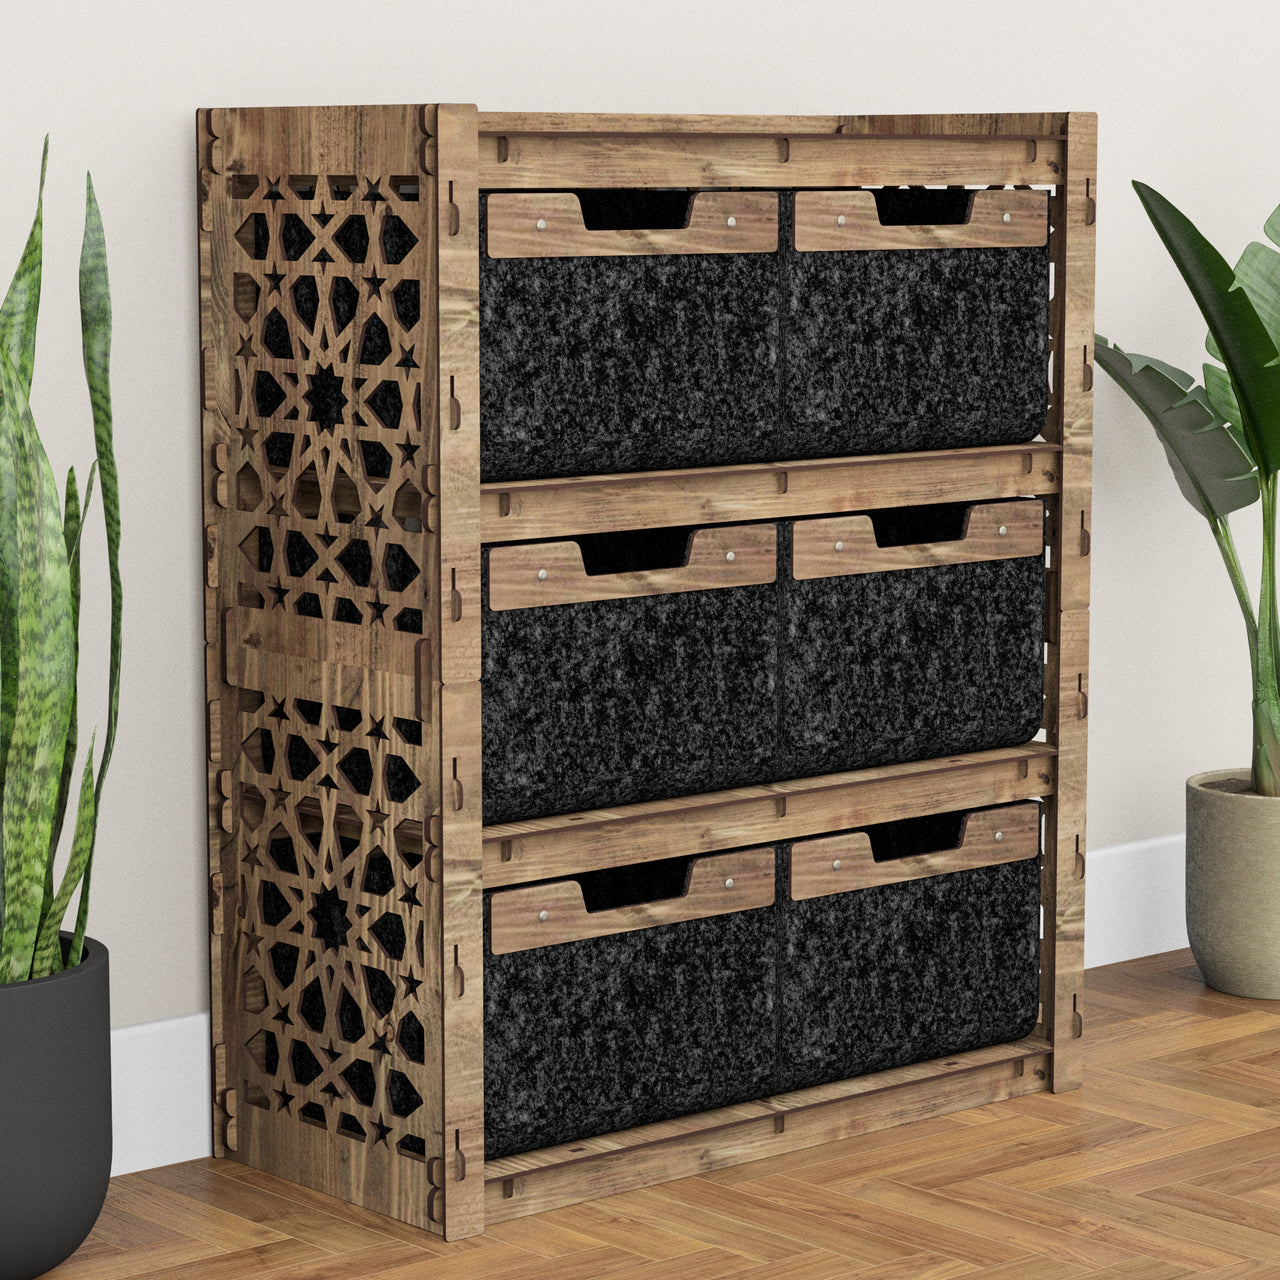 Arabic Dresser 6 Drawers Storage Unit [6 LARGE BLACK BINS]